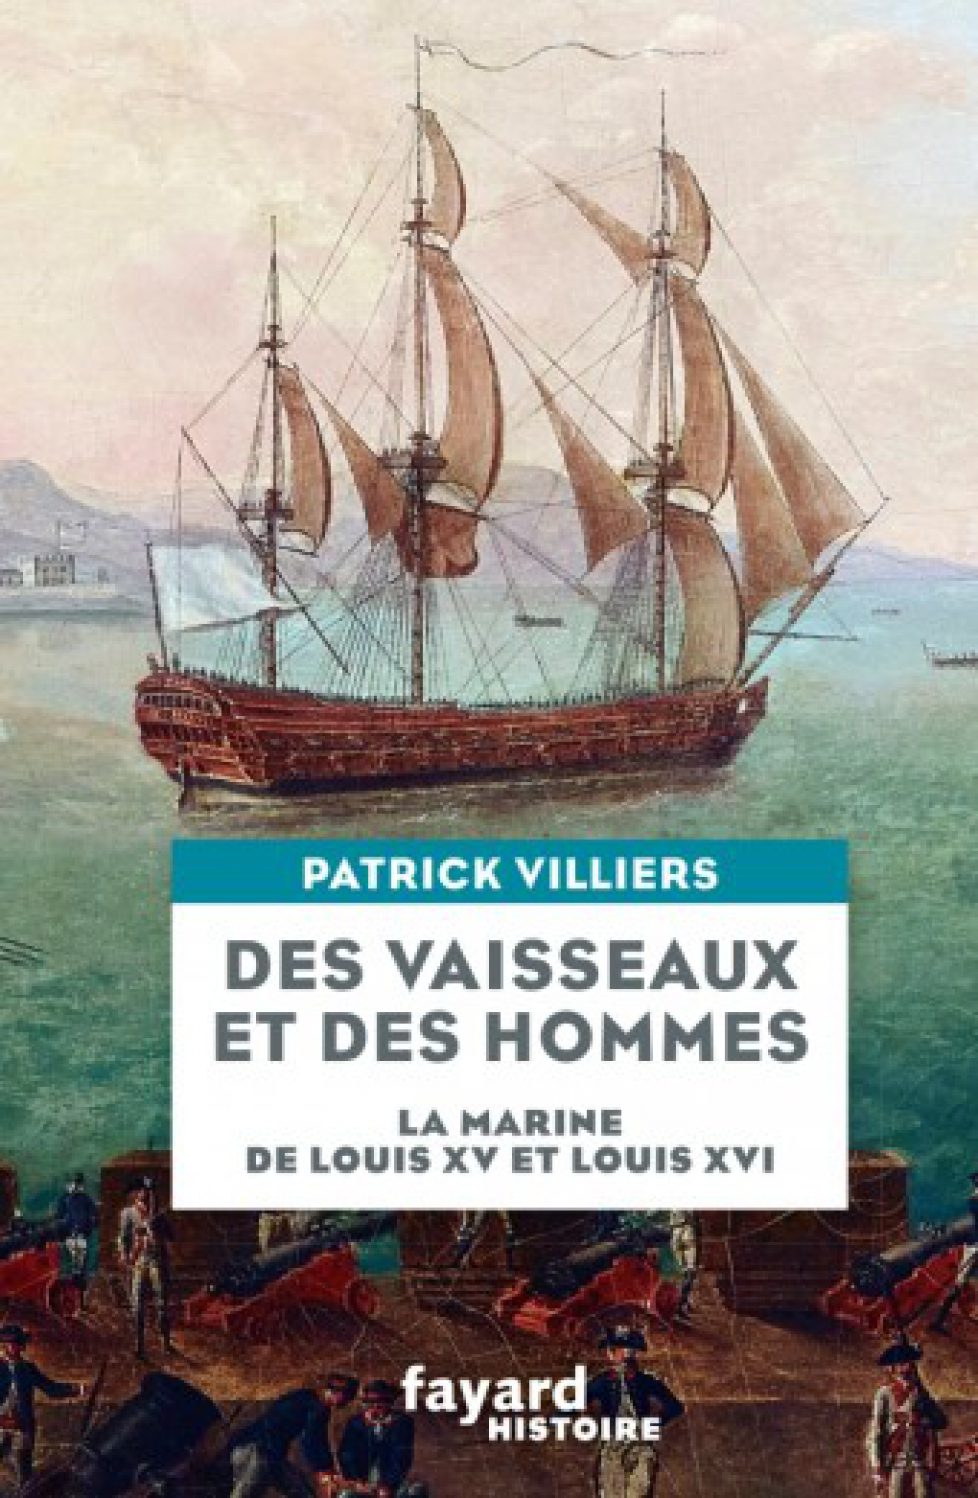 La marine française au XVIIIe siècle - Page 8 97822112